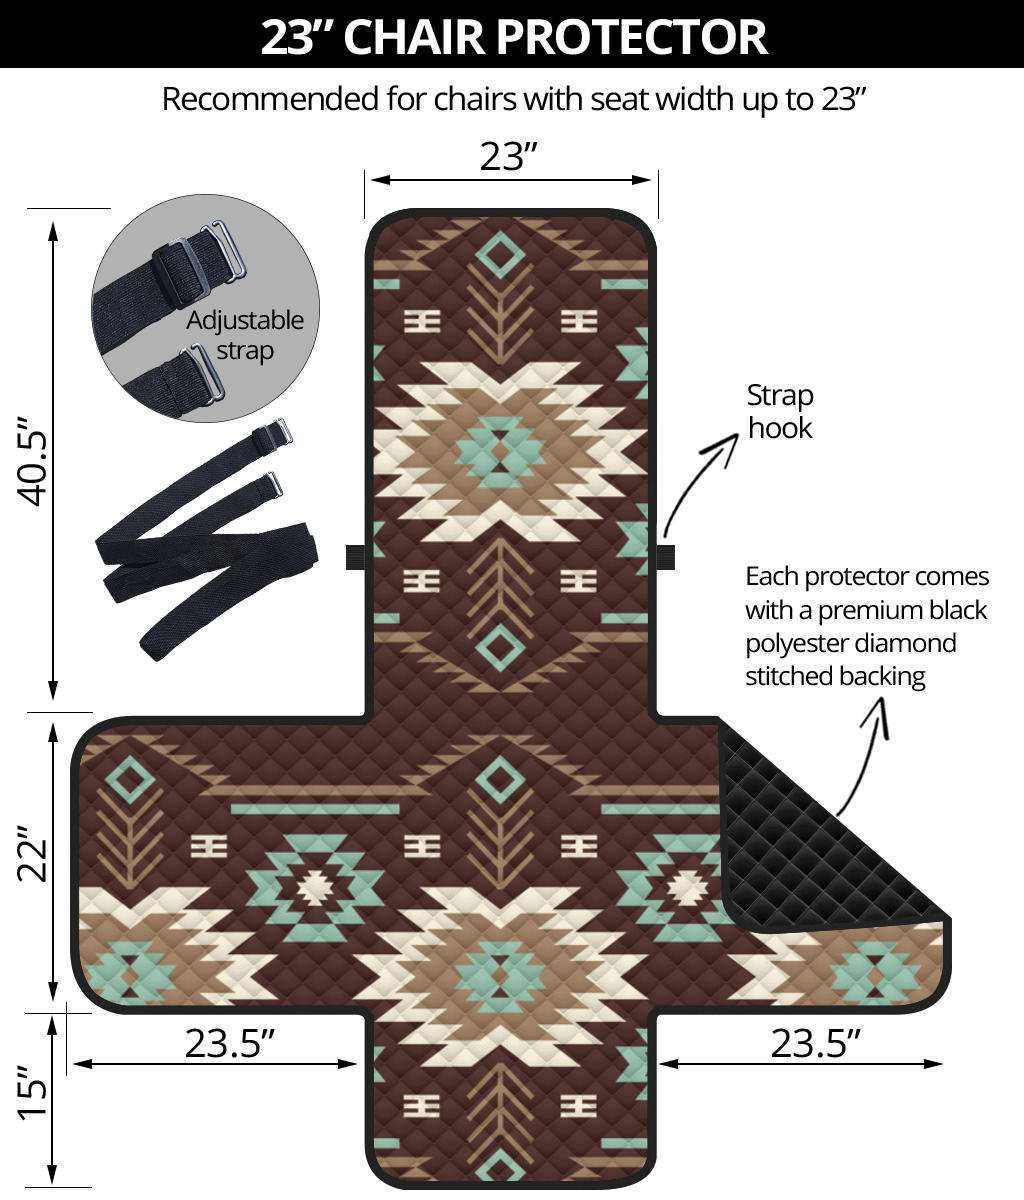 Powwow Storegb nat00737 pattern native 23 chair sofa protector